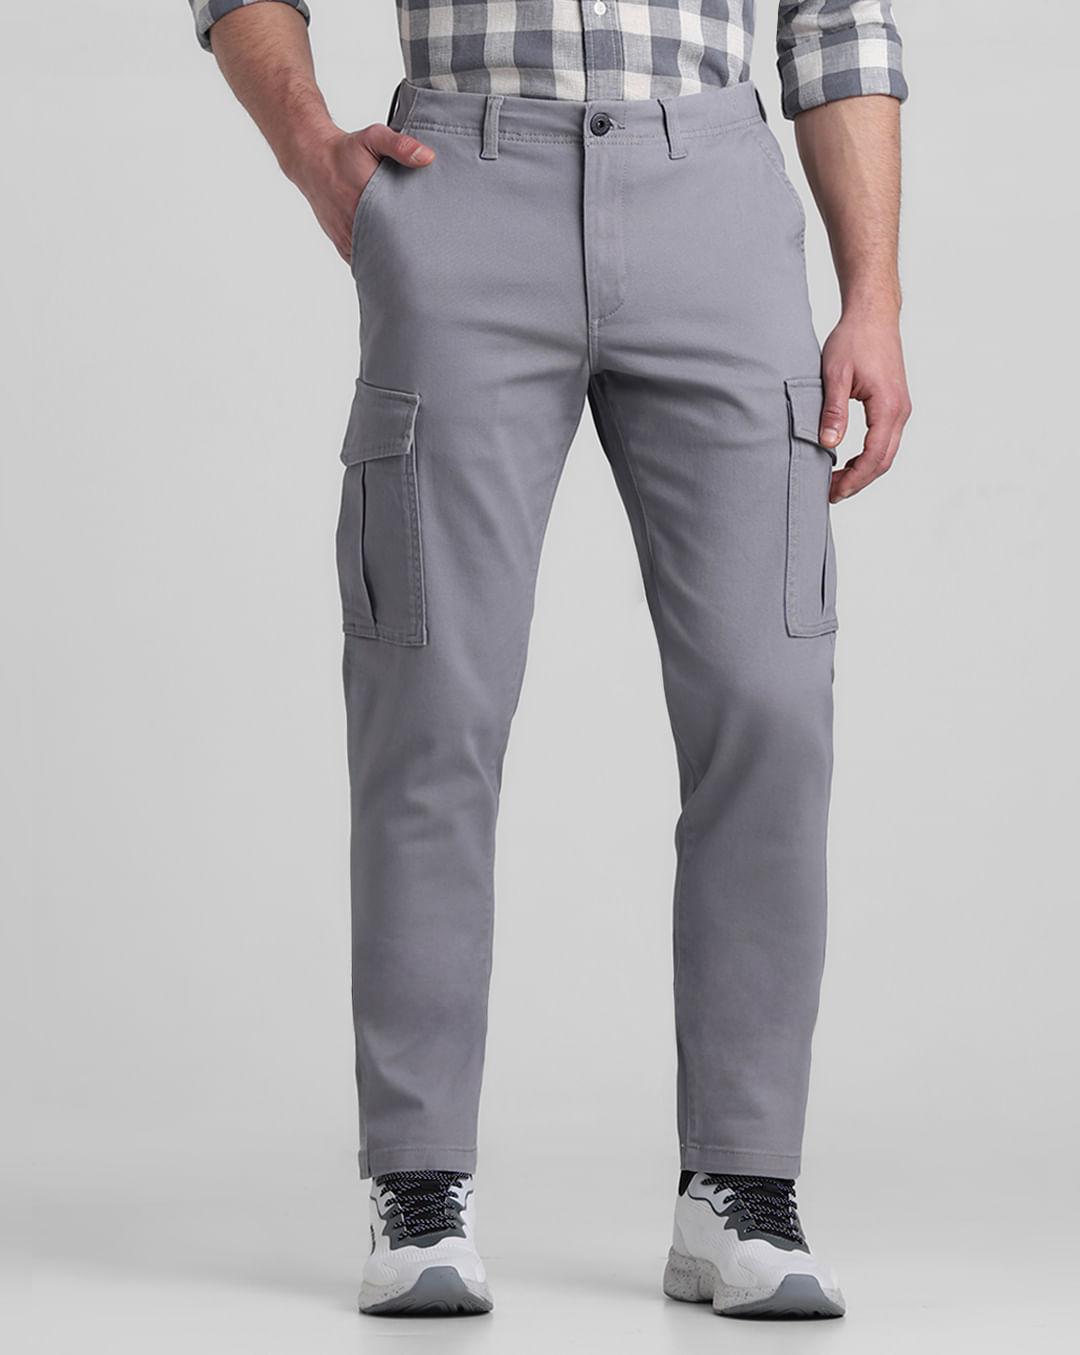 grey mid rise slim fit pants